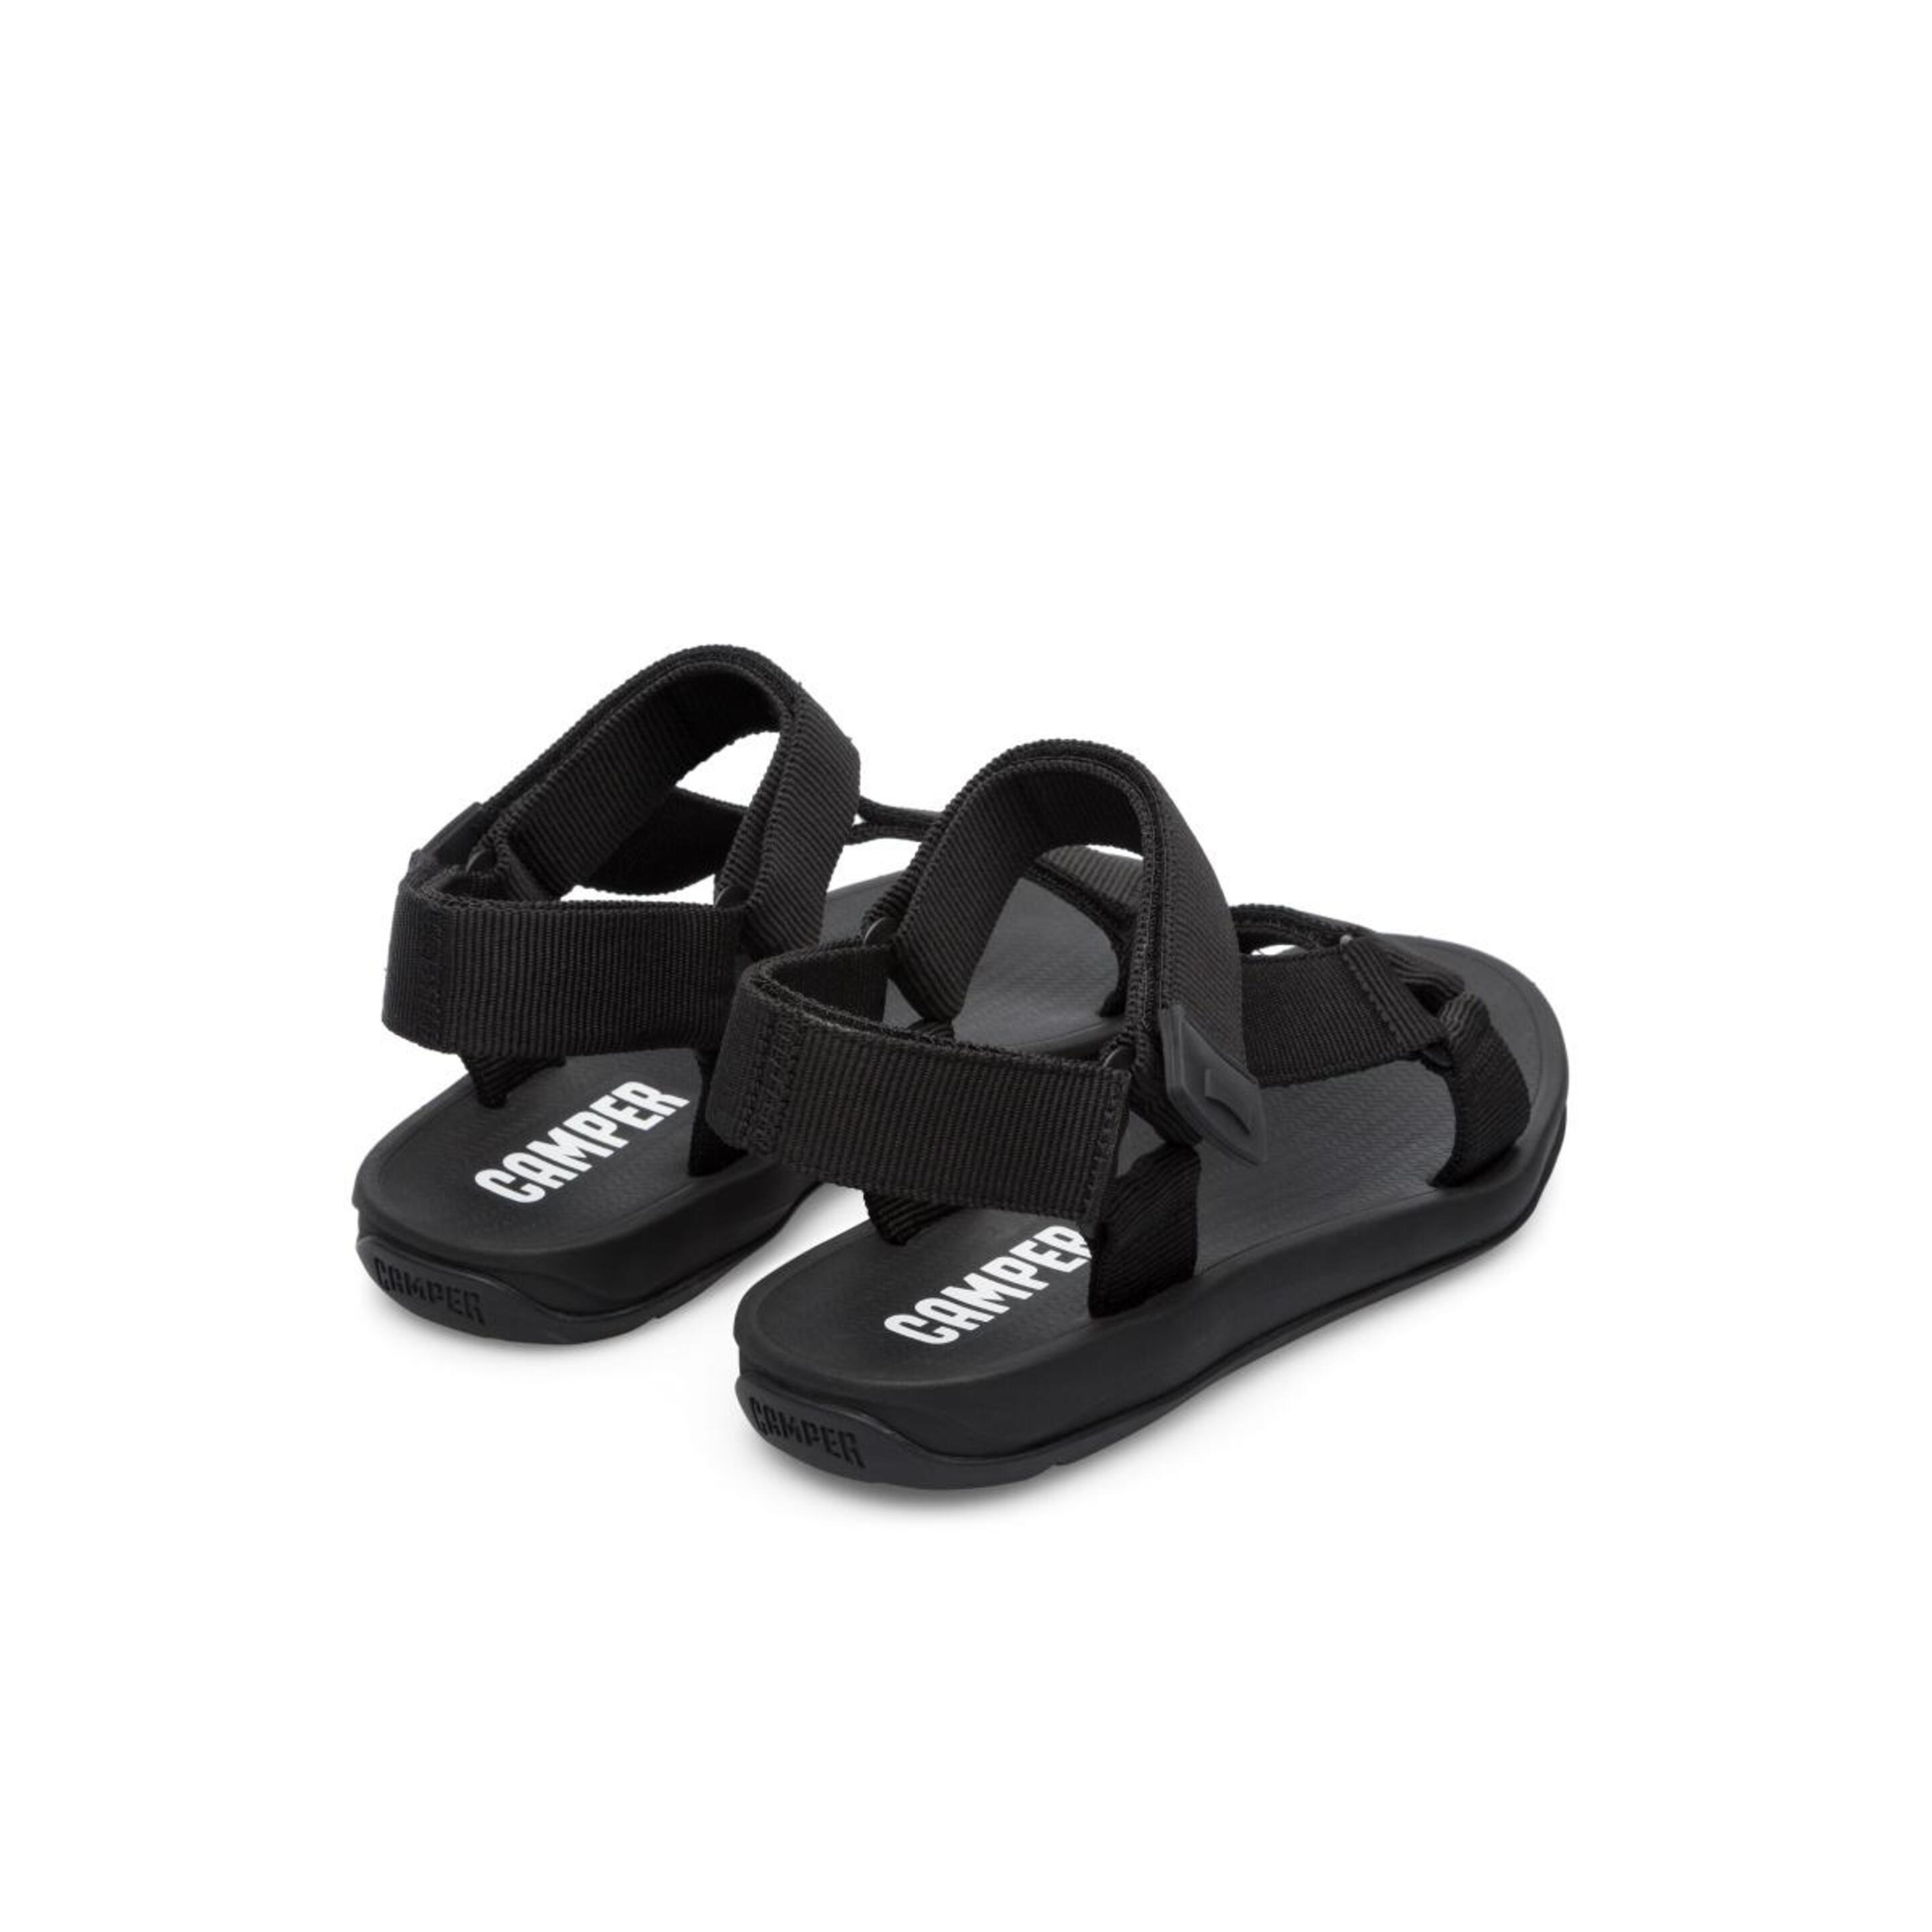 Sandalias Match Camper - negro - Zapatos Hombre  MKP